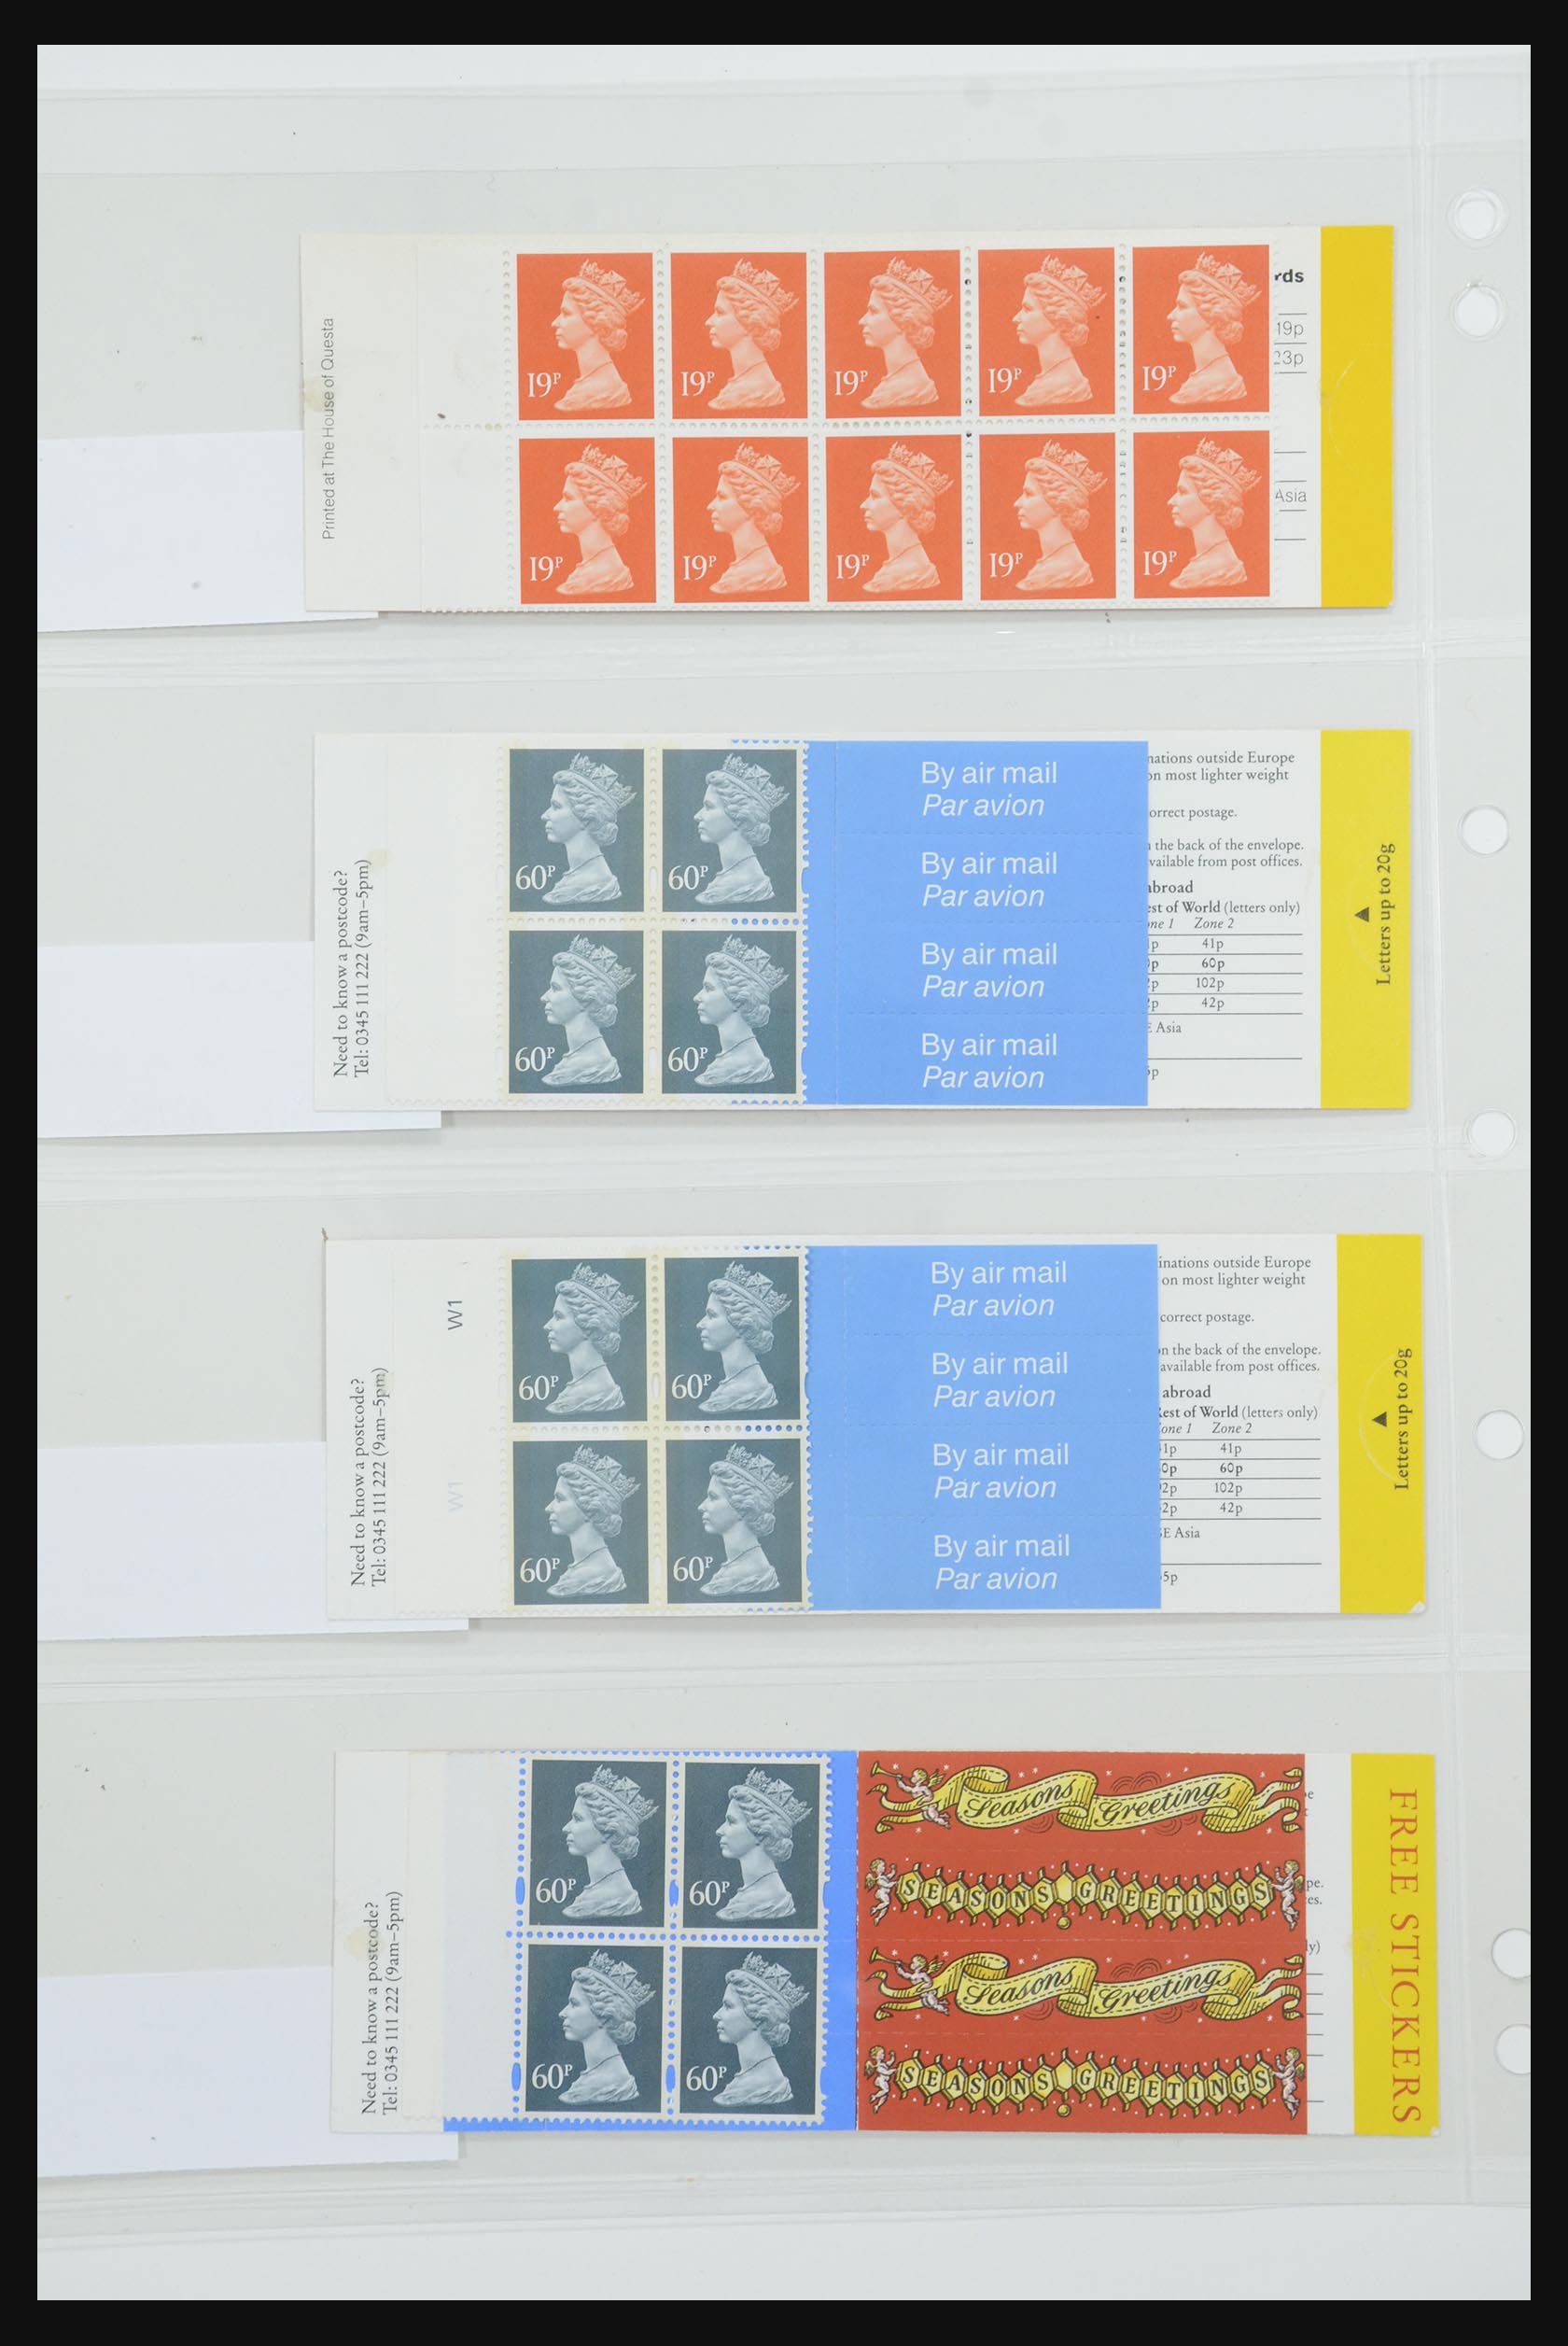 31959 076 - 31959 Great Britain stampbooklets 1987-2016!!